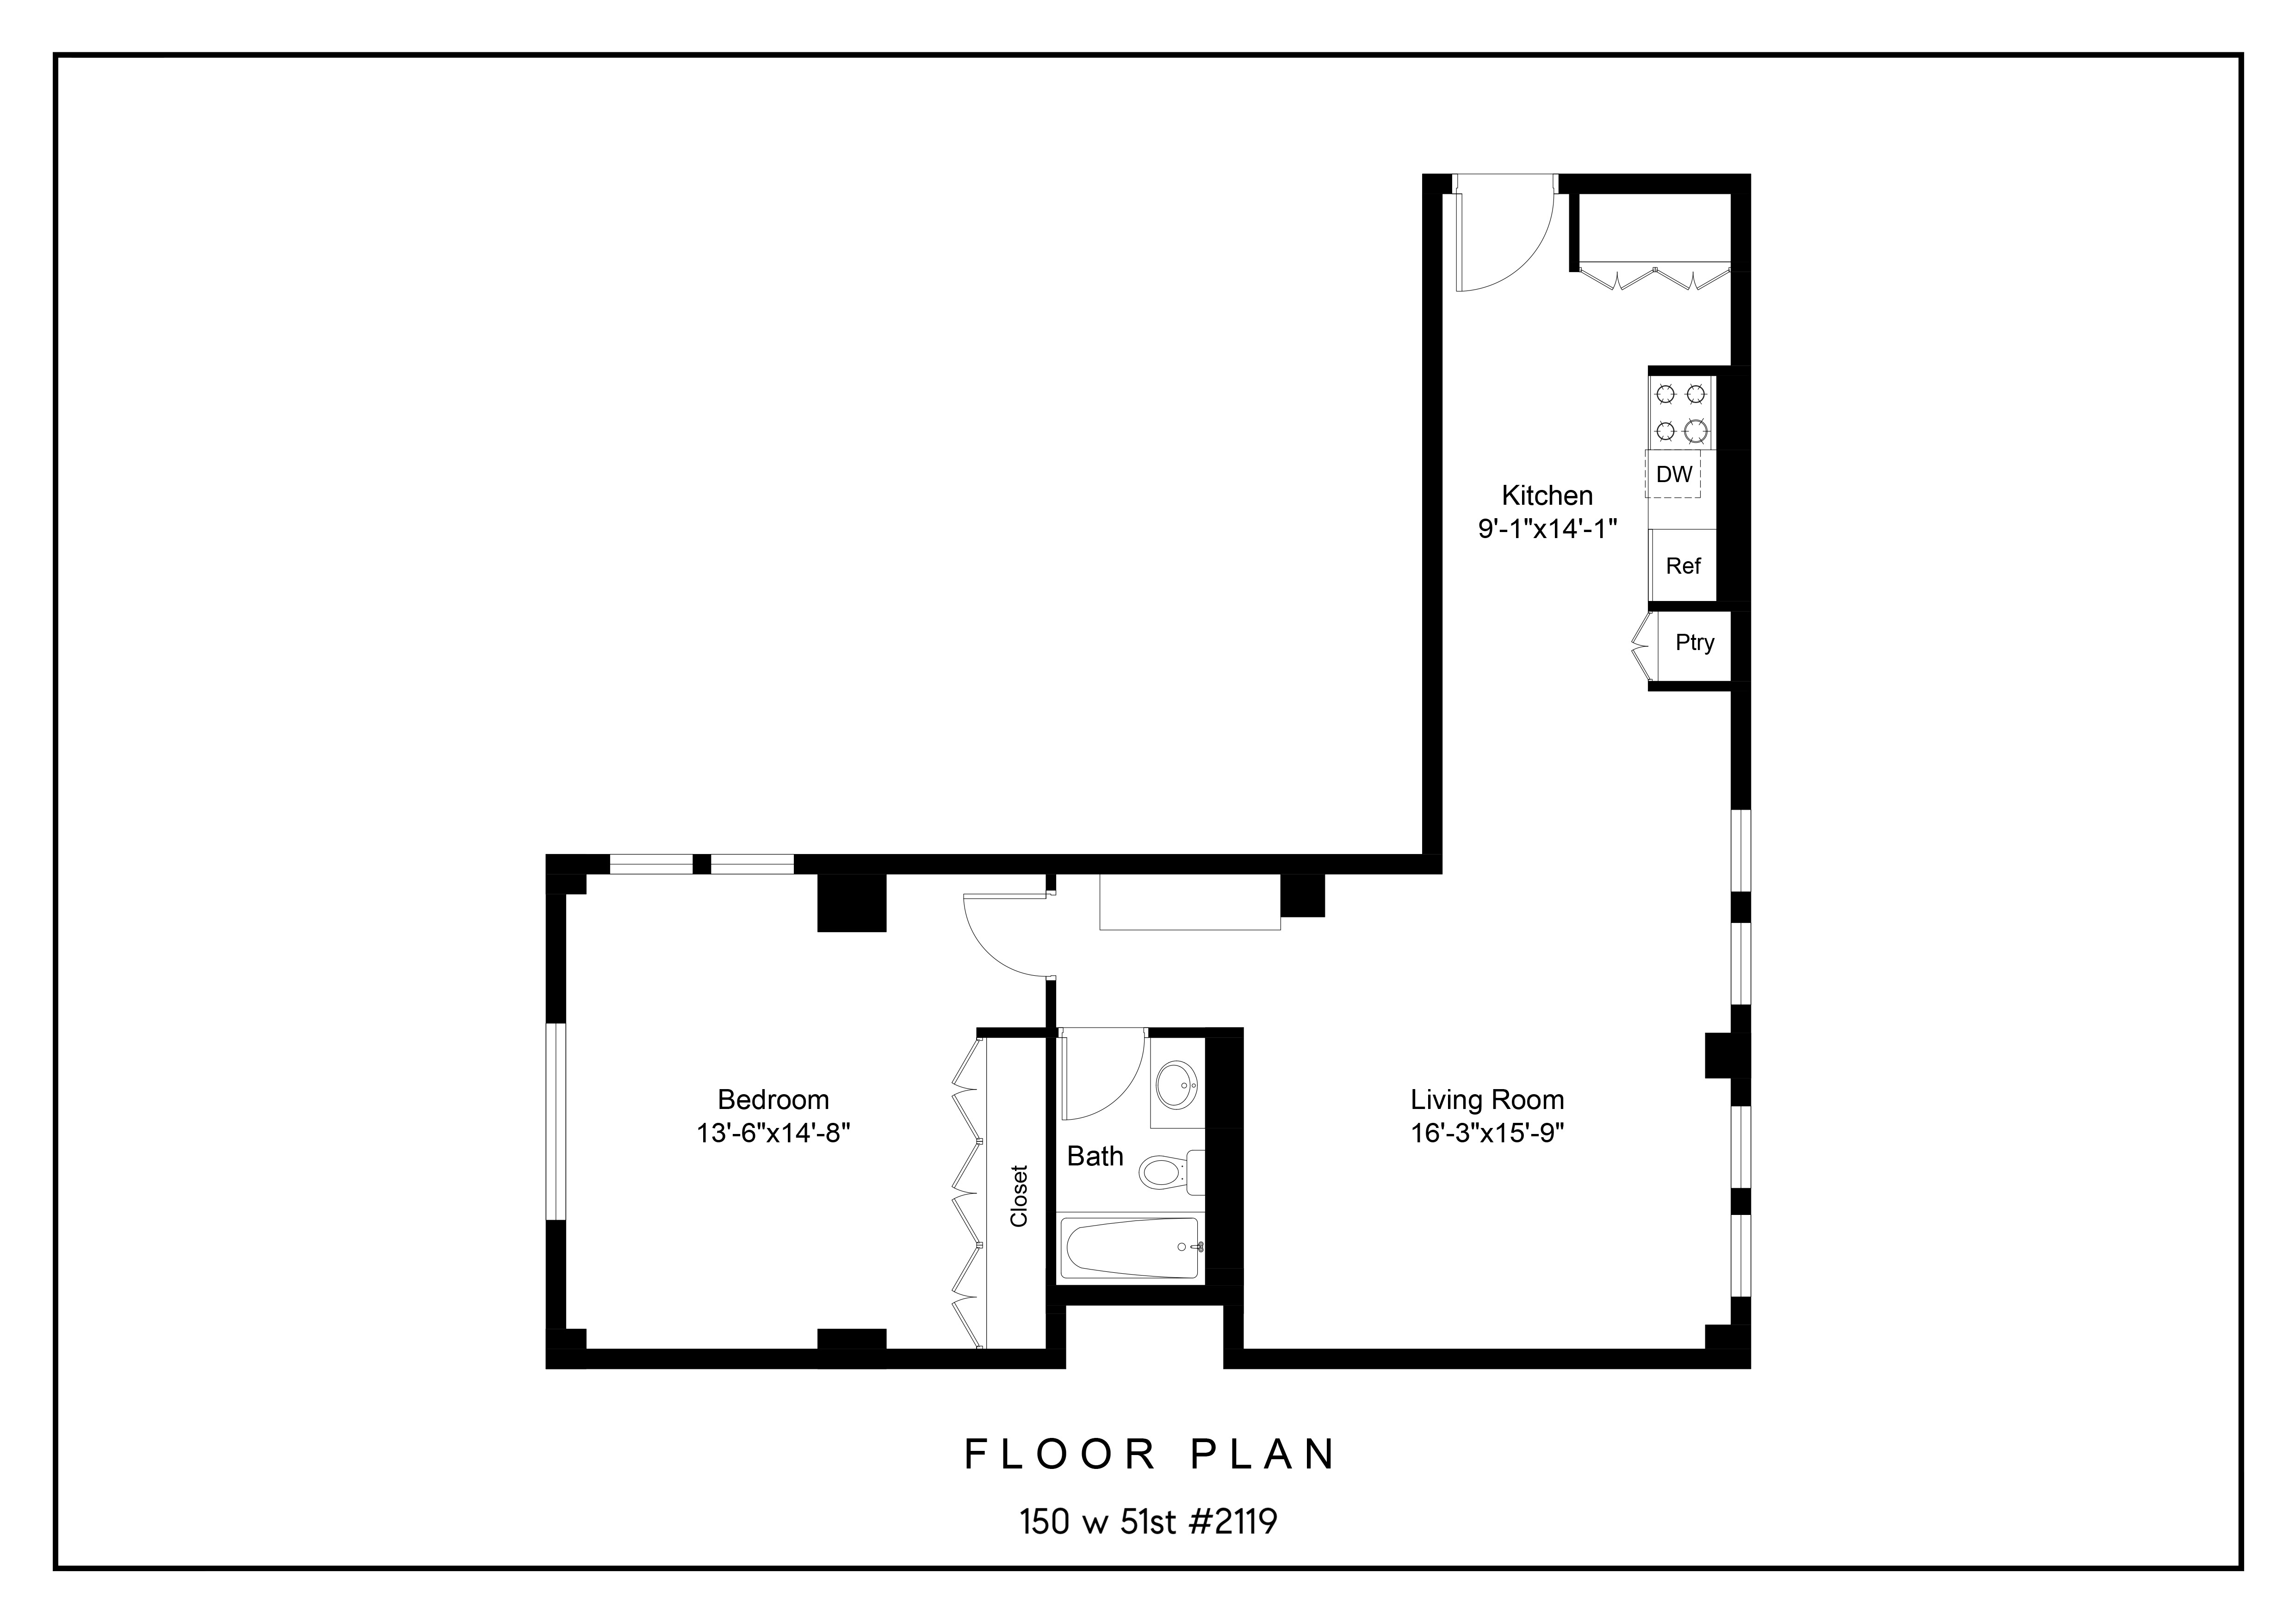 Floorplan for 150 West 51st Street, 2119